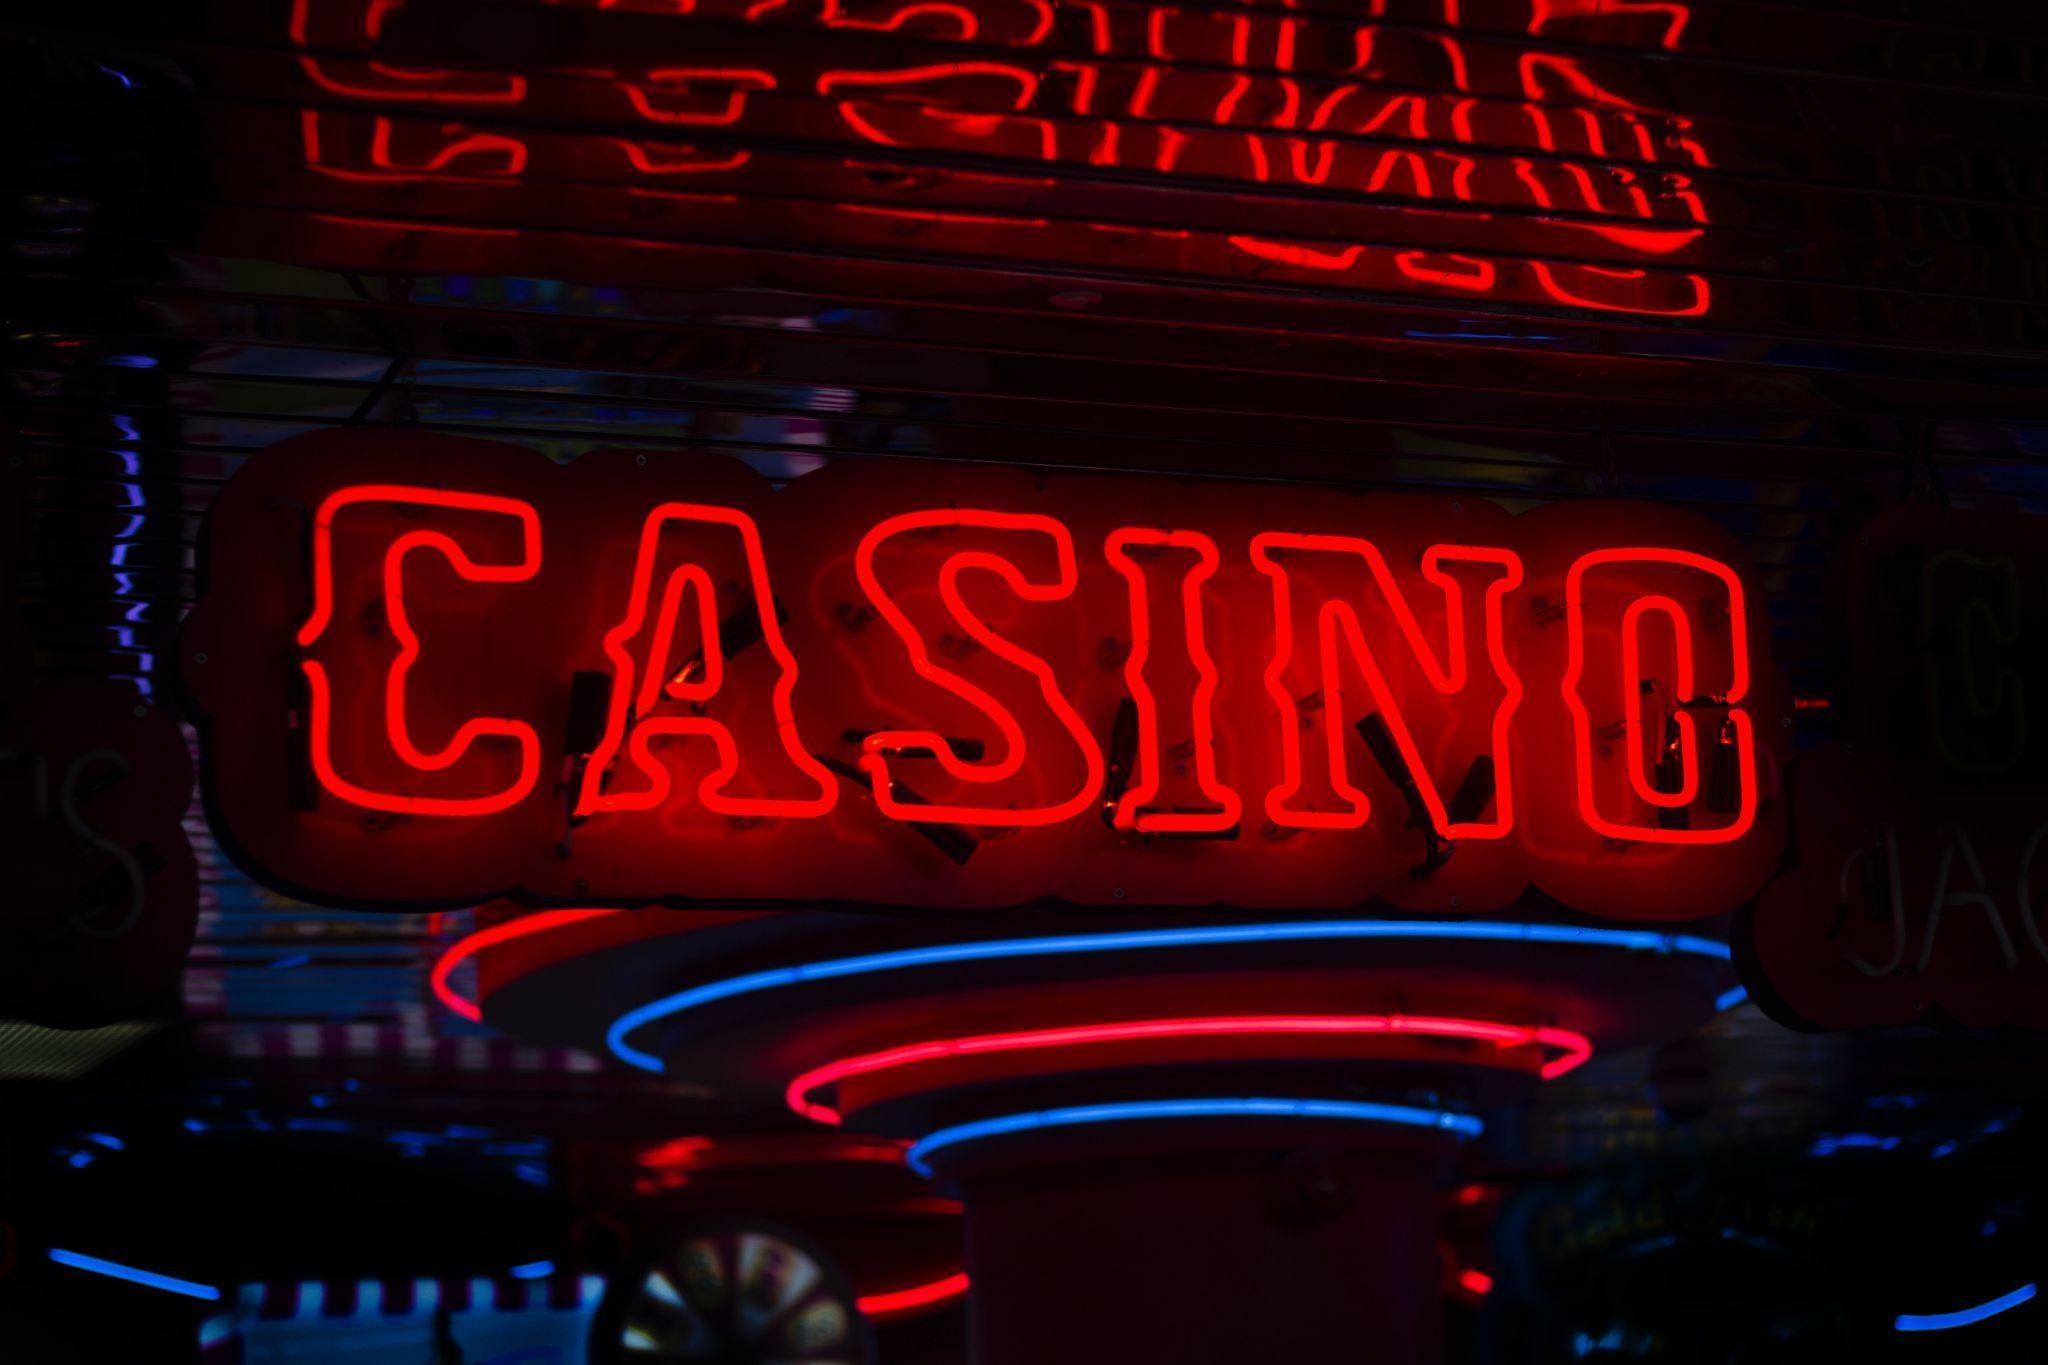 Neon text casino glowing against a dark background